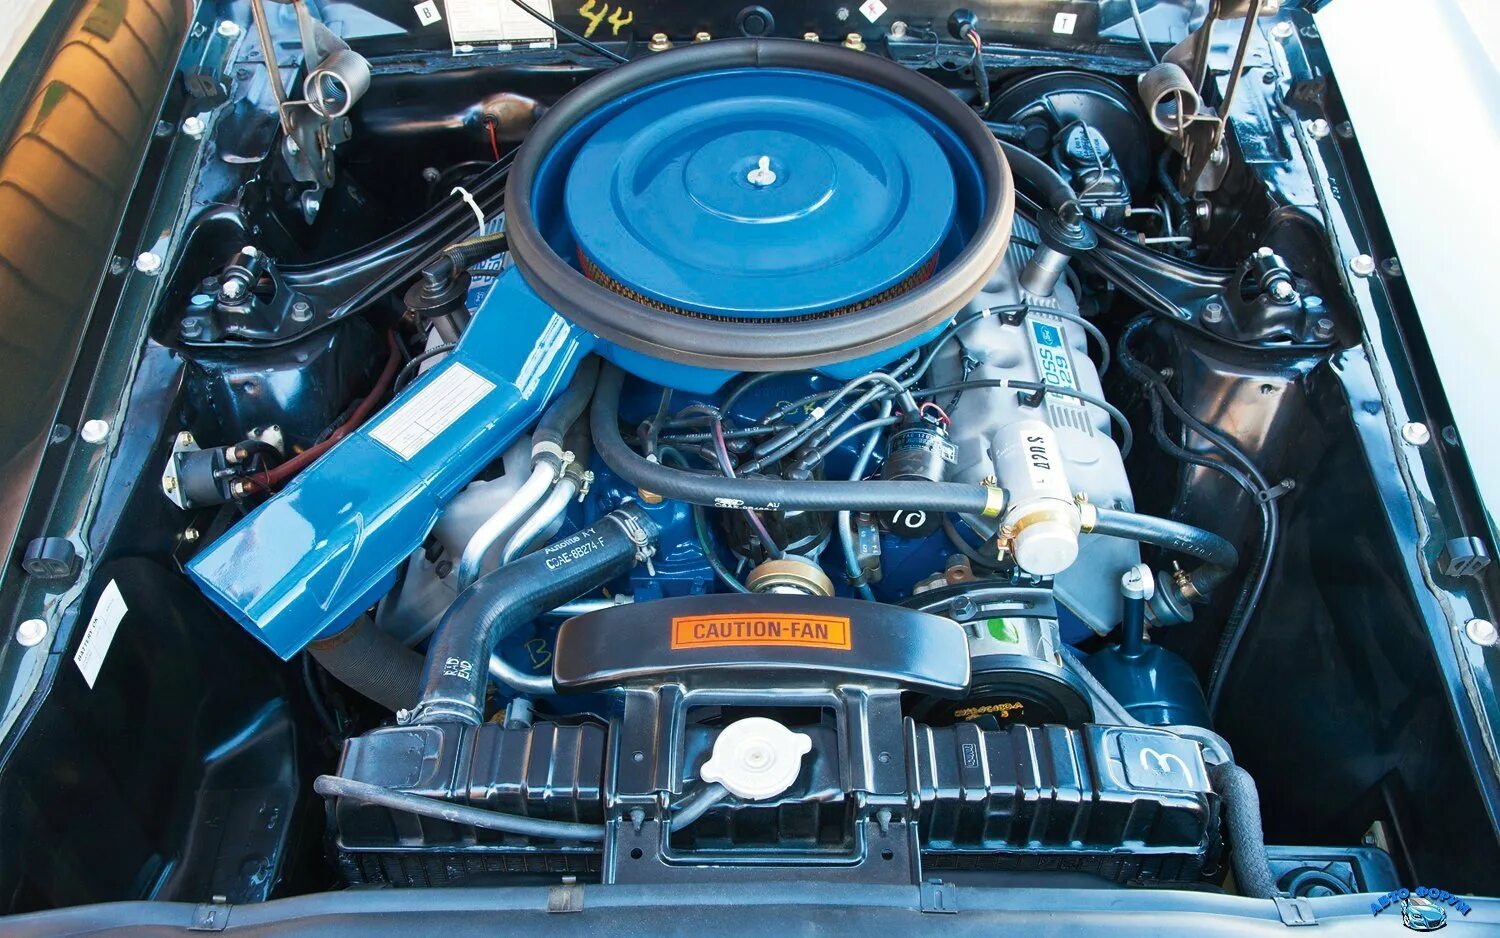 Мотор сток. Ford Mustang Boss 429. Ford Mustang 1969 engine. Двигатель Форд Мустанг 1969. Двигатель Форд Мустанг босс 302.